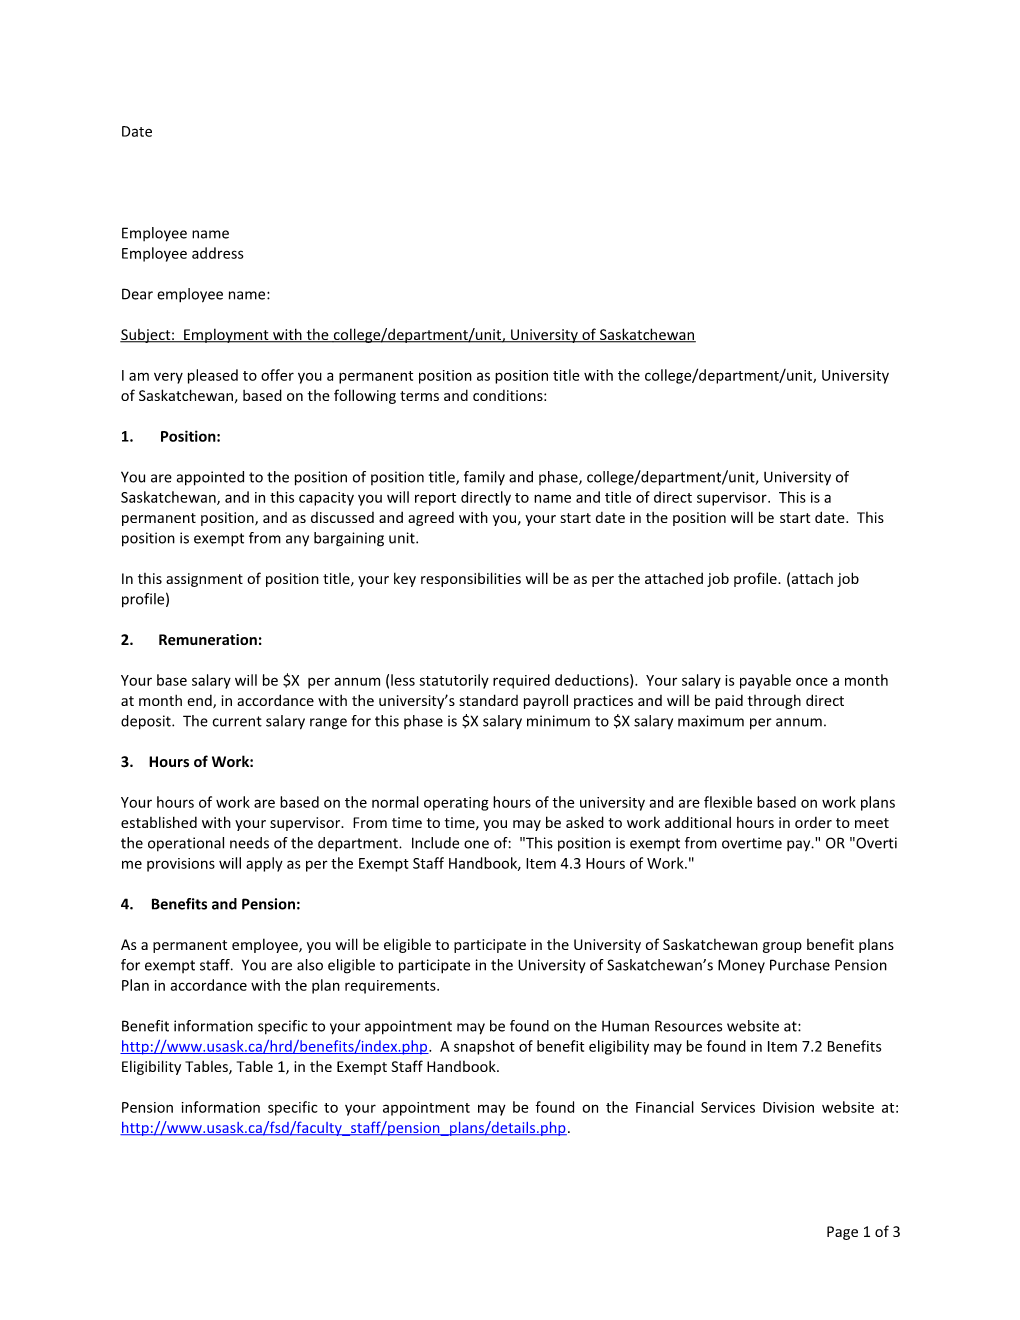 Subject: Employment with the College/Department/Unit, University of Saskatchewan